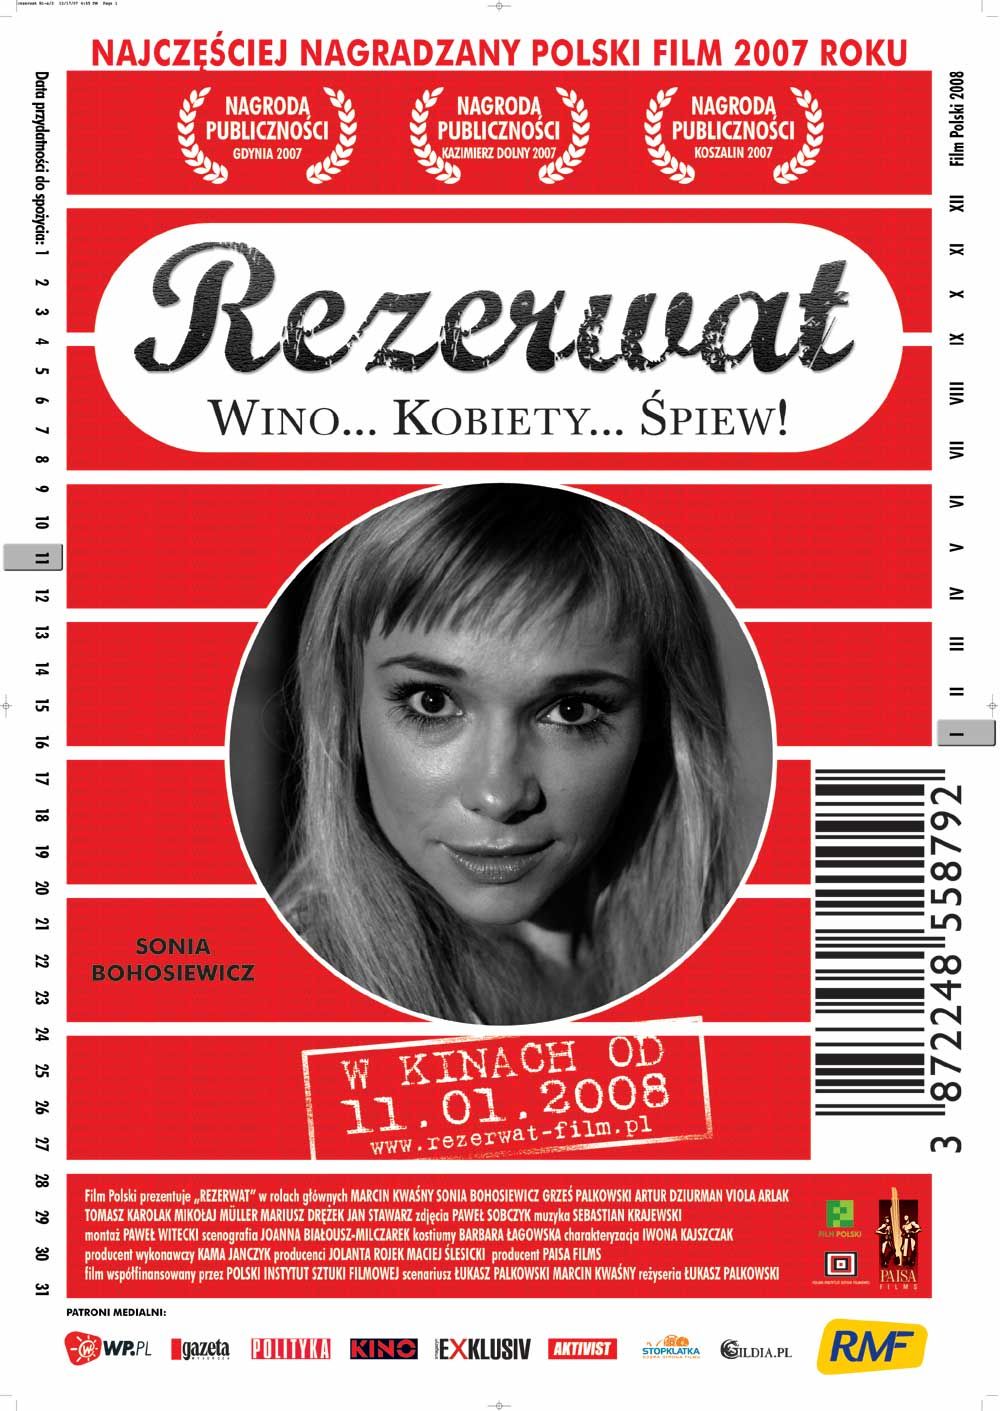 Extra Large Movie Poster Image for Rezerwat (#2 of 2)